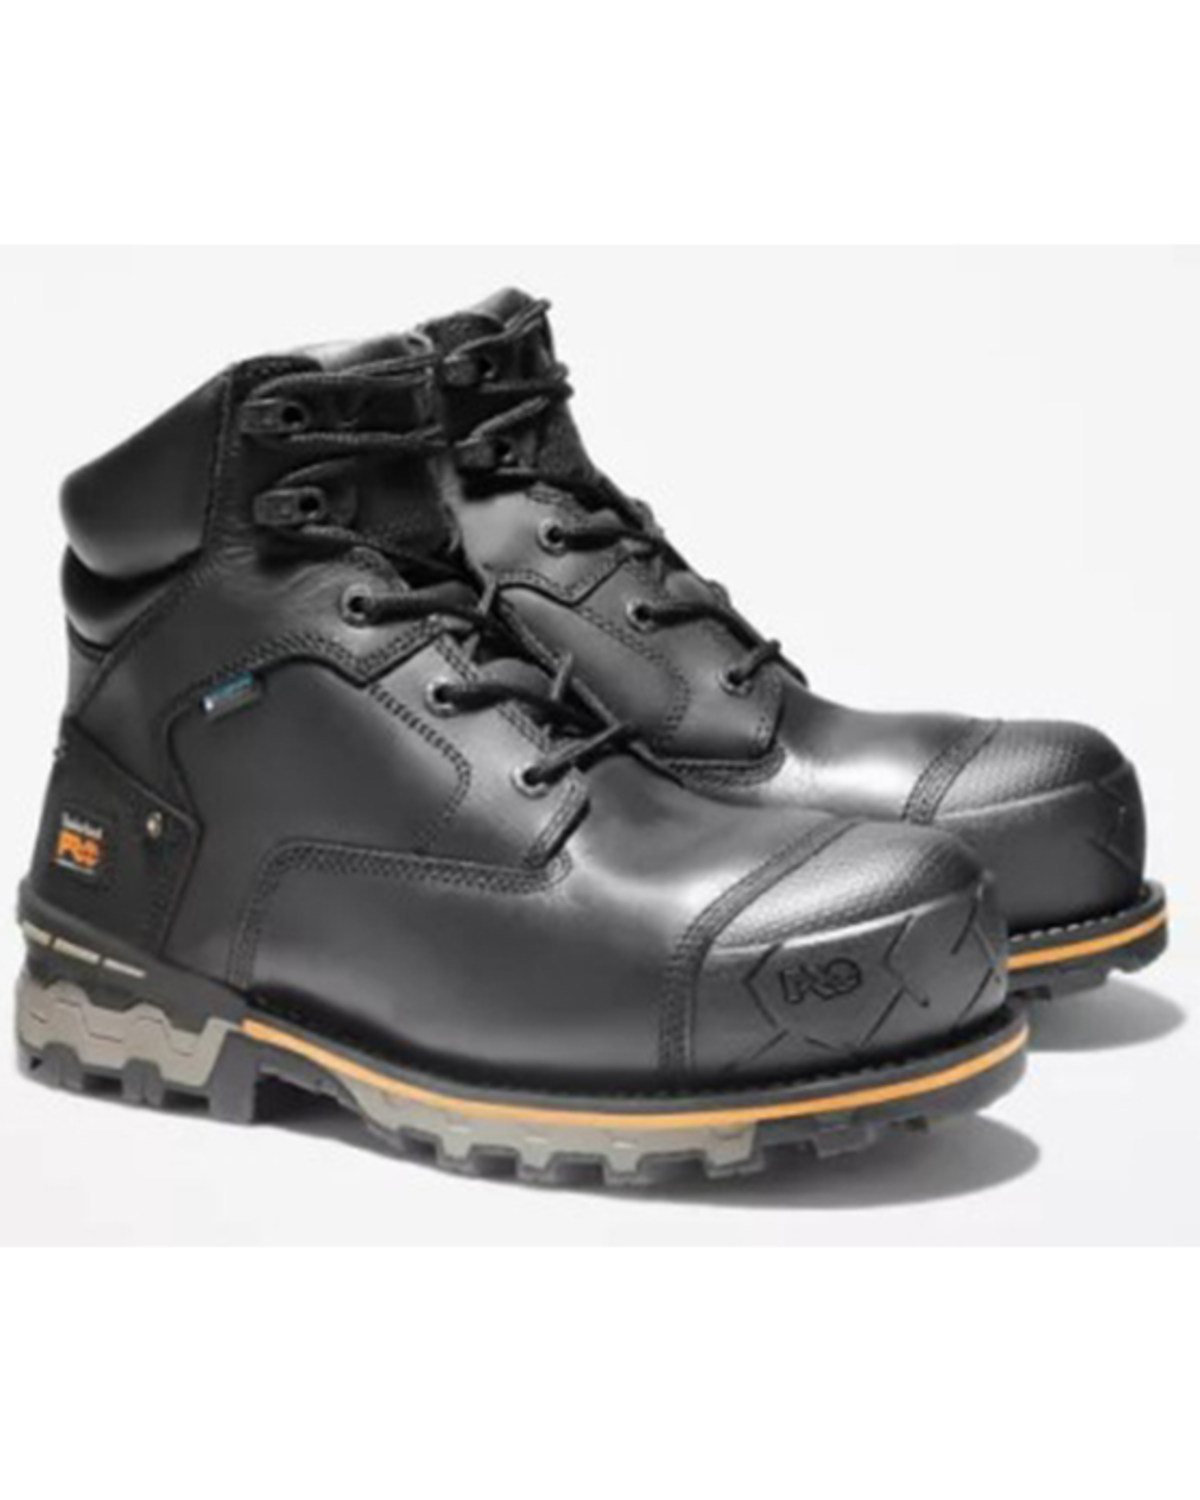 Timberland Men's Boondock 6" Lace-Up Waterproof Work Boots - Composite Toe